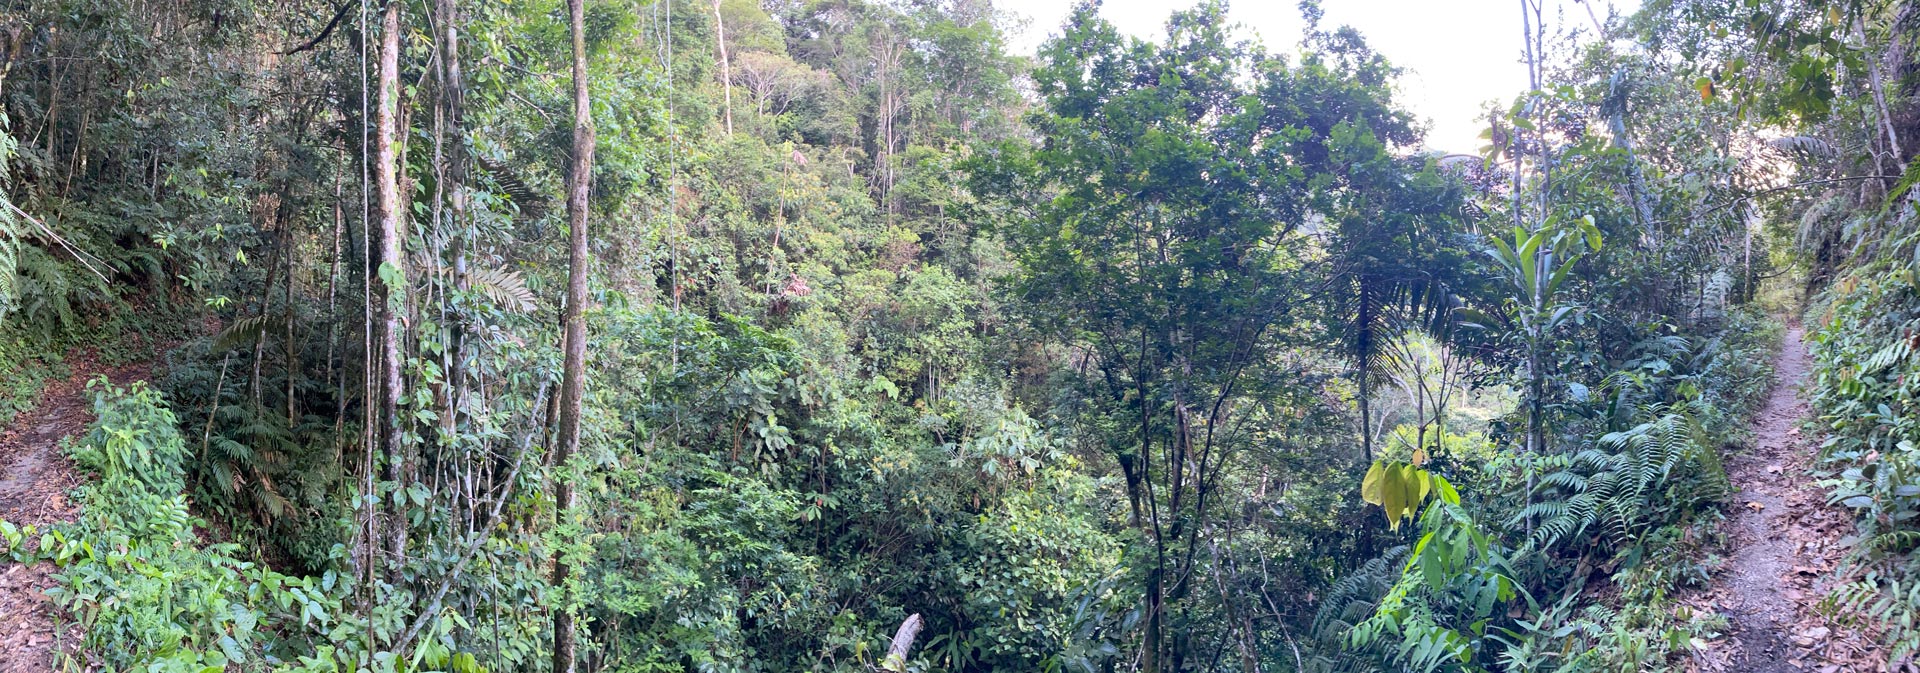 Bosque tropical. Belén de los Andaquíes, Caquetá.